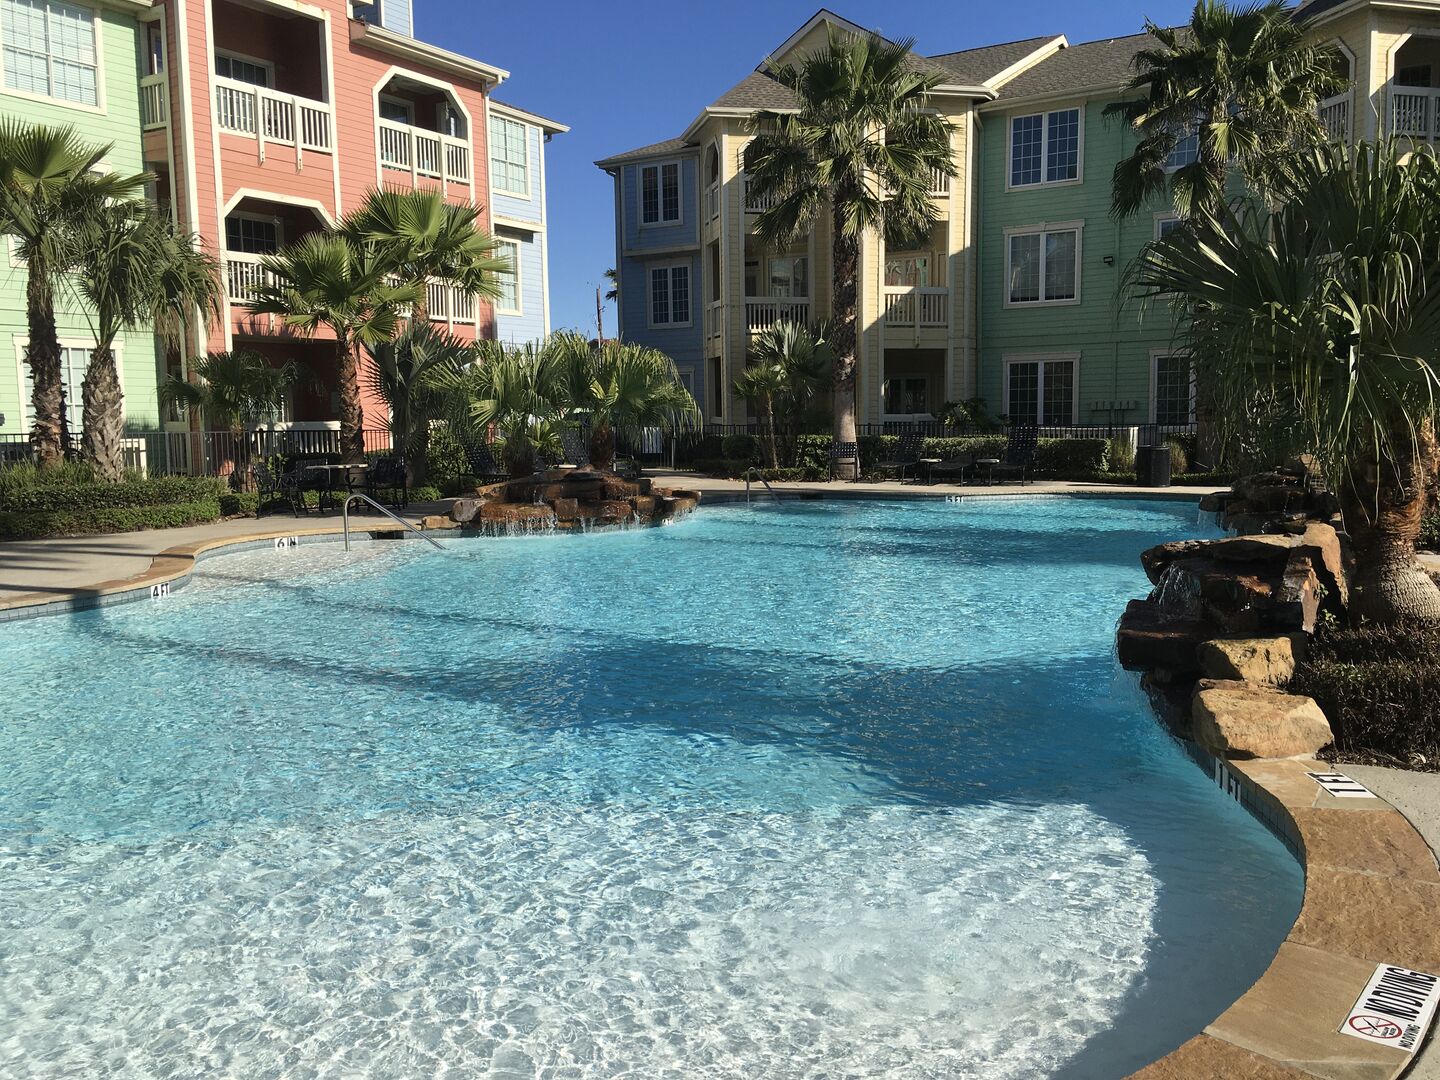 The resort pools are amazing!